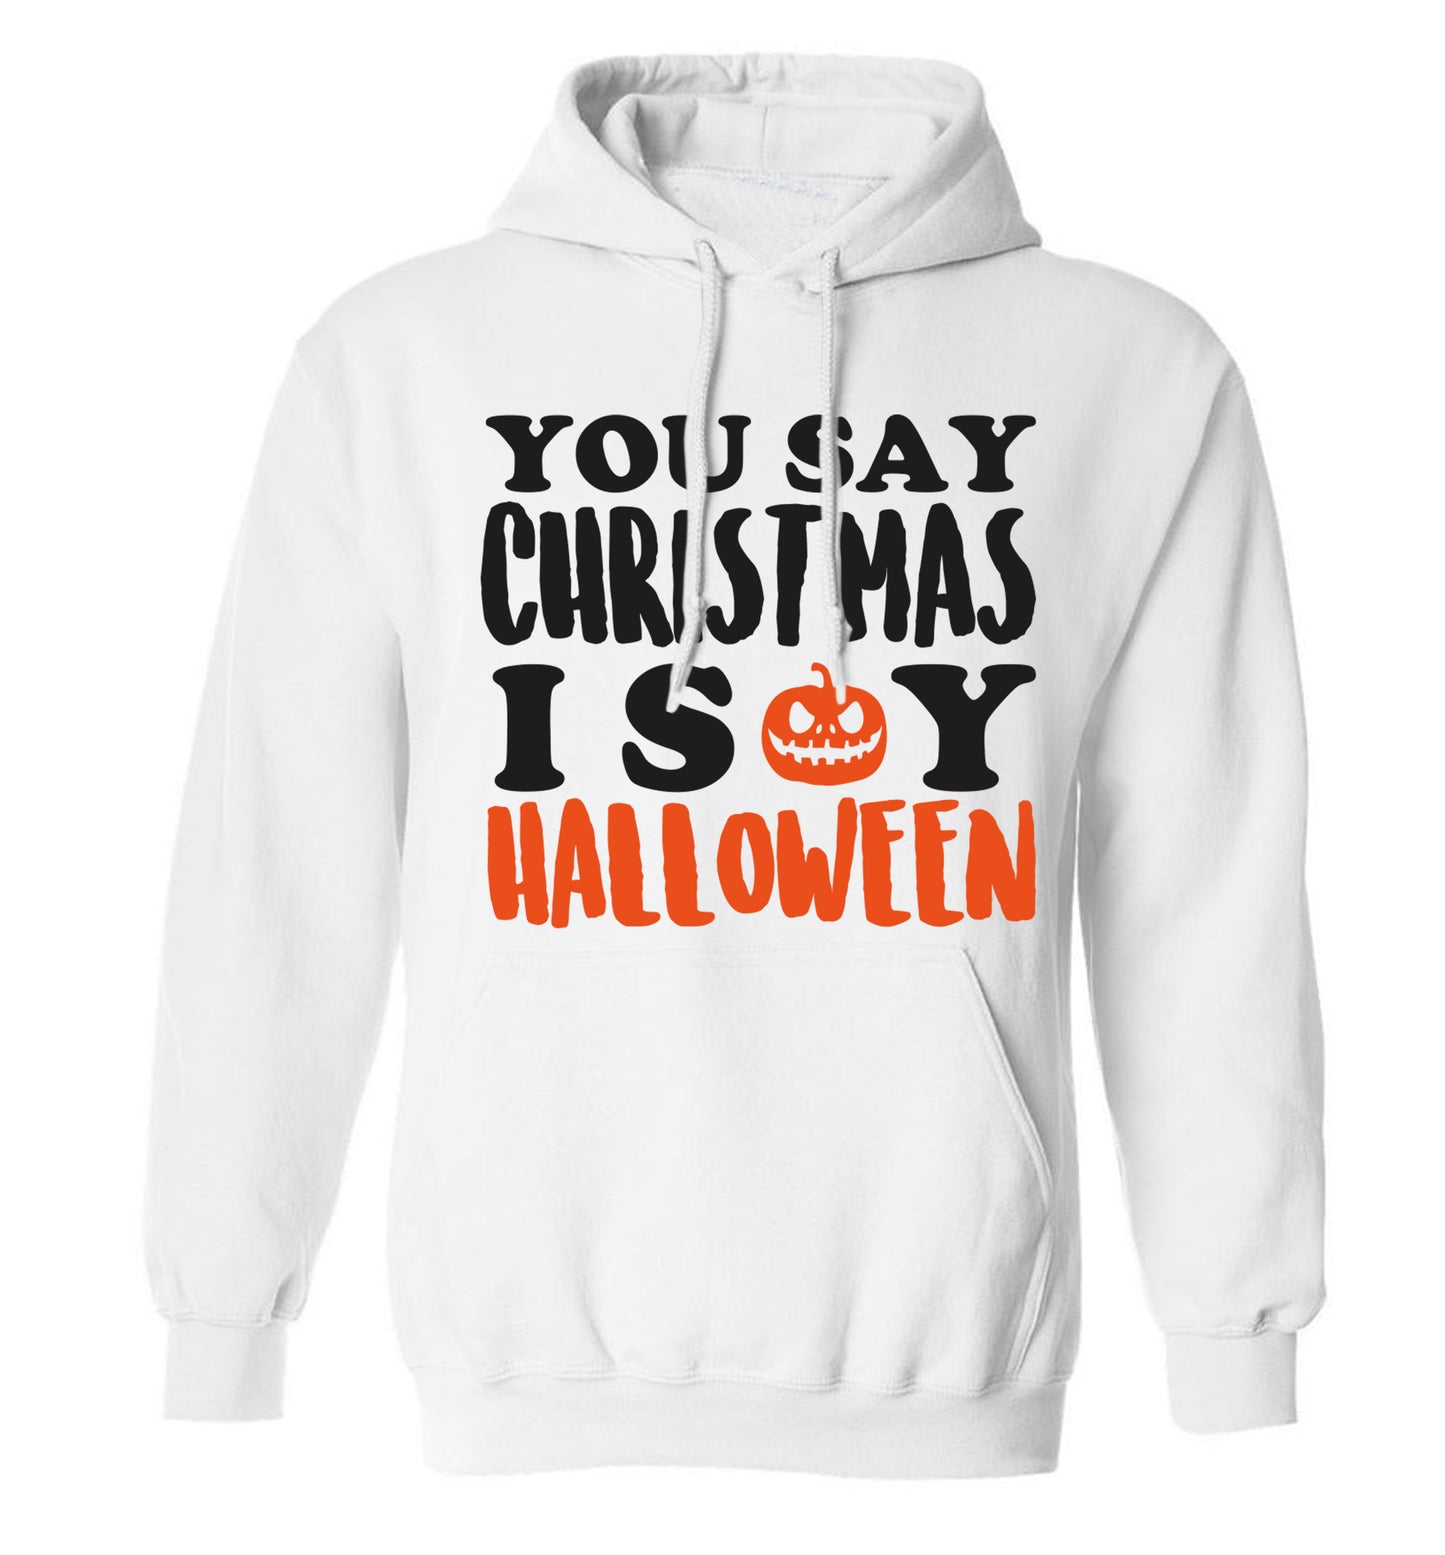 You say christmas I say halloween! adults unisex white hoodie 2XL